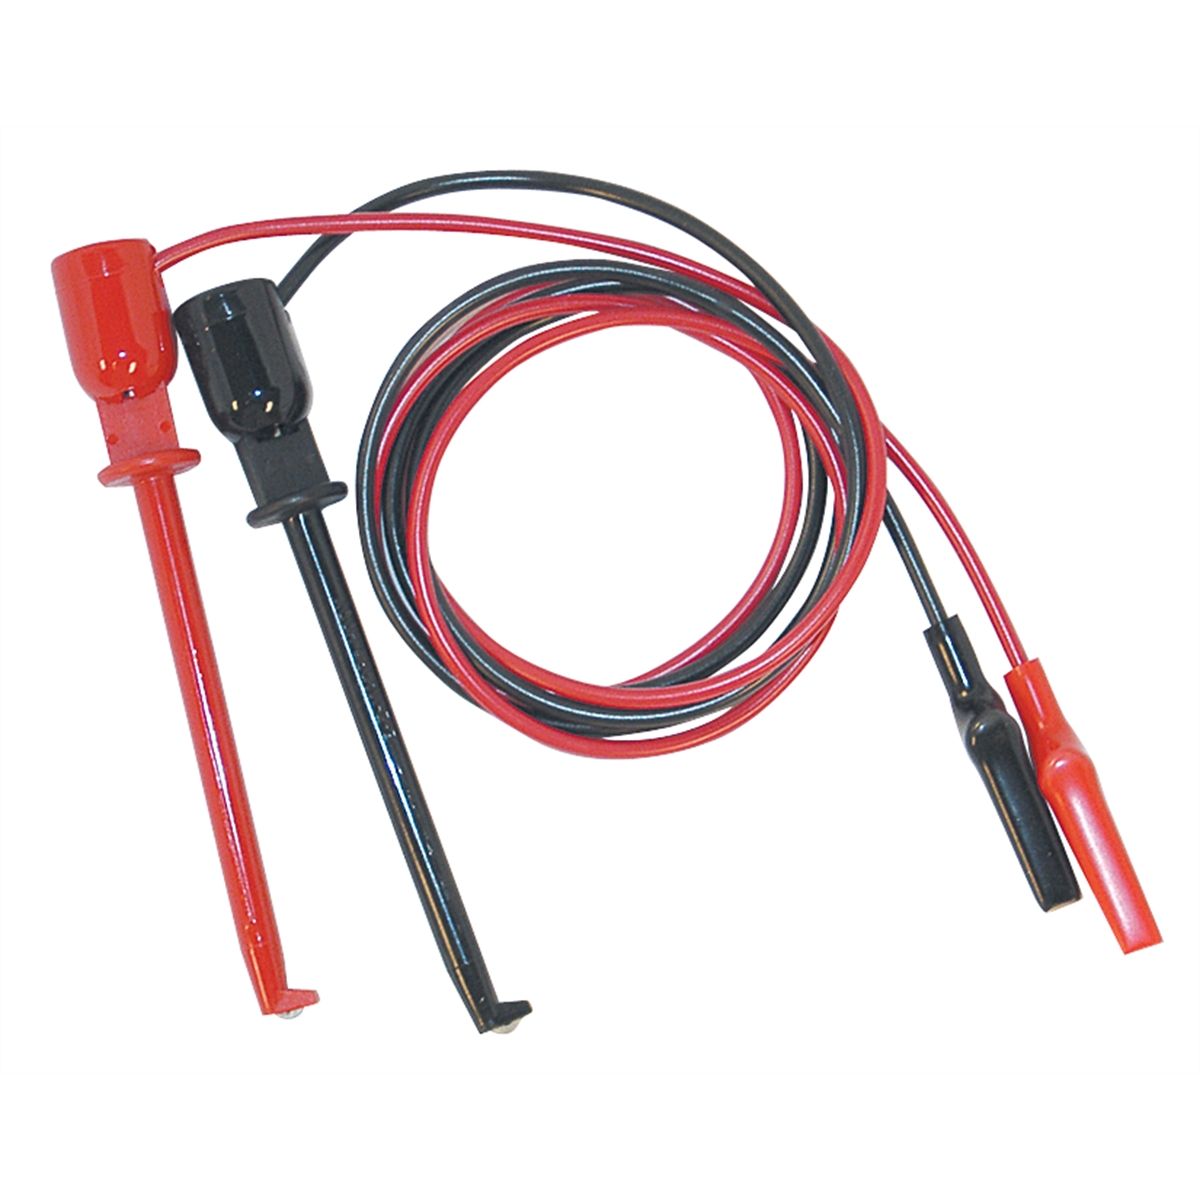 Yescom USB Port Multimeter Test Lead Kit Alligator Hook W Banana Plug Clip Cables for Electronic Scientific Automotive 